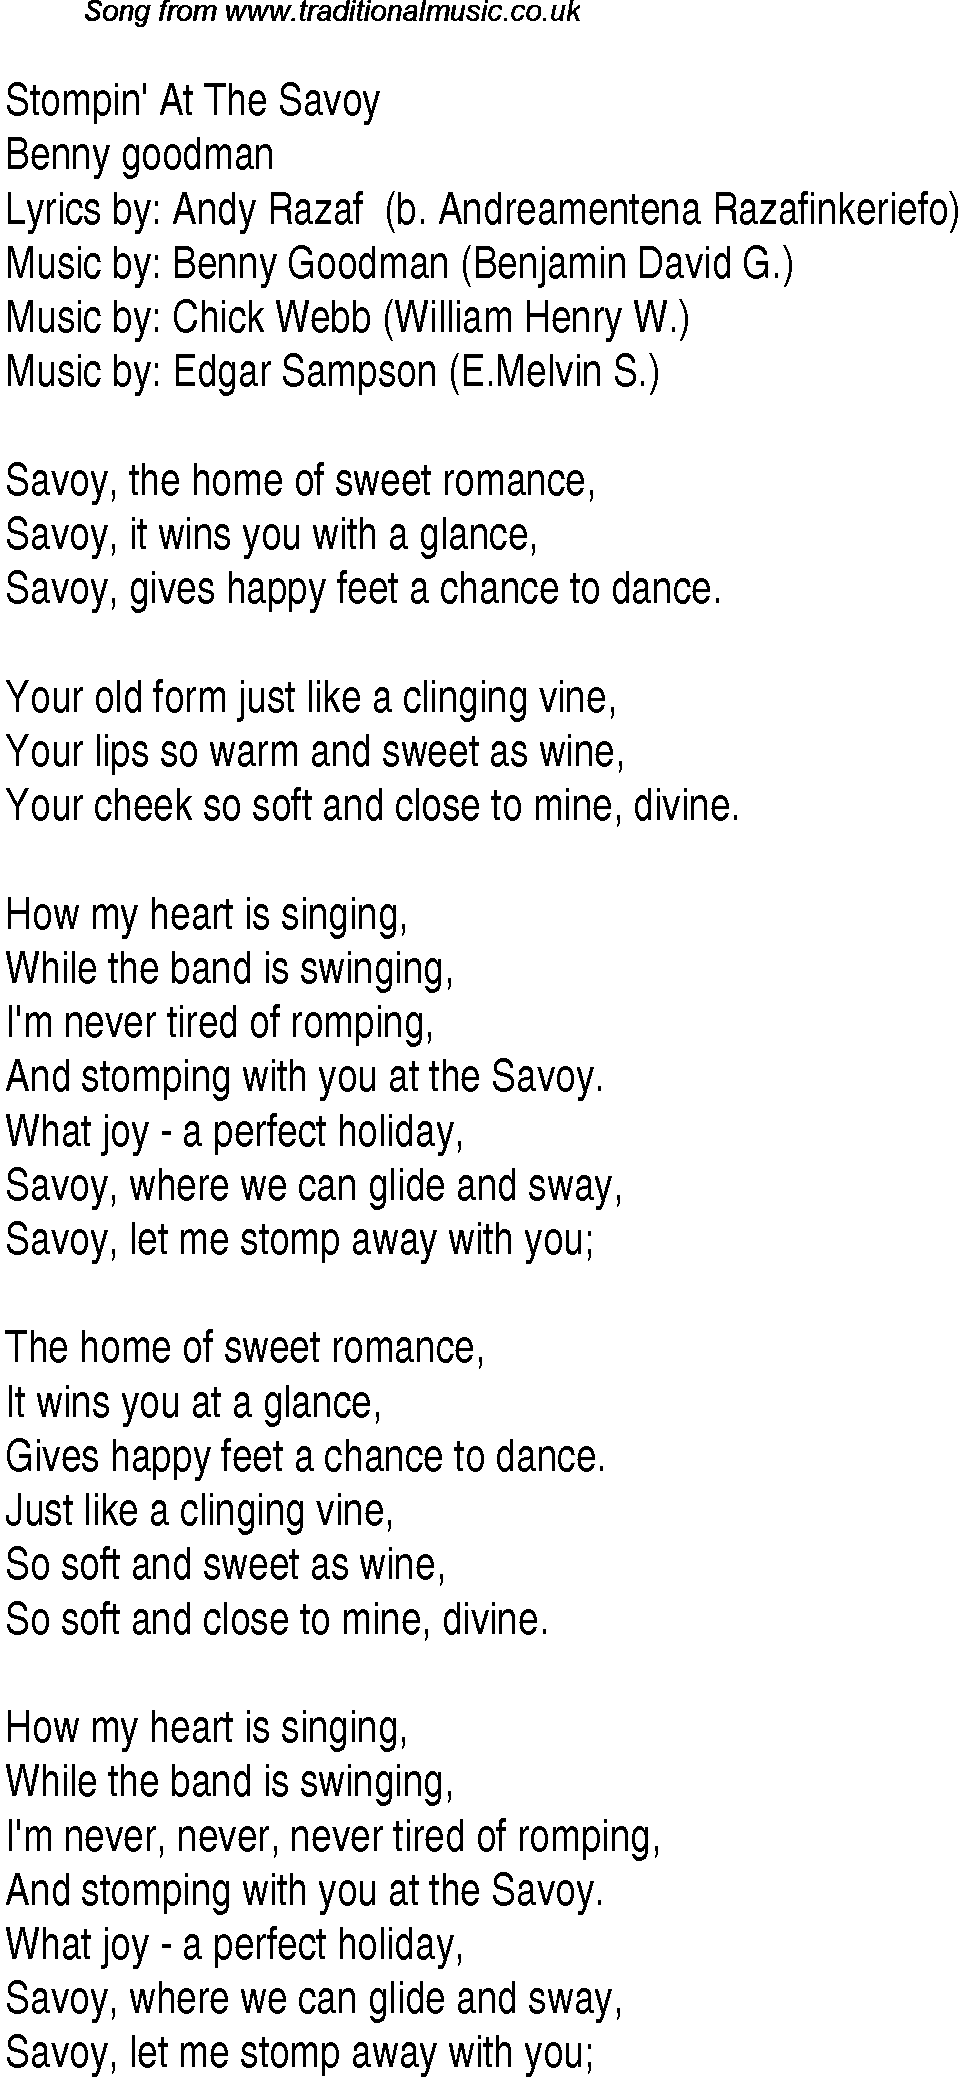 Music charts top songs 1937 - lyrics for Stompin At The Savoy